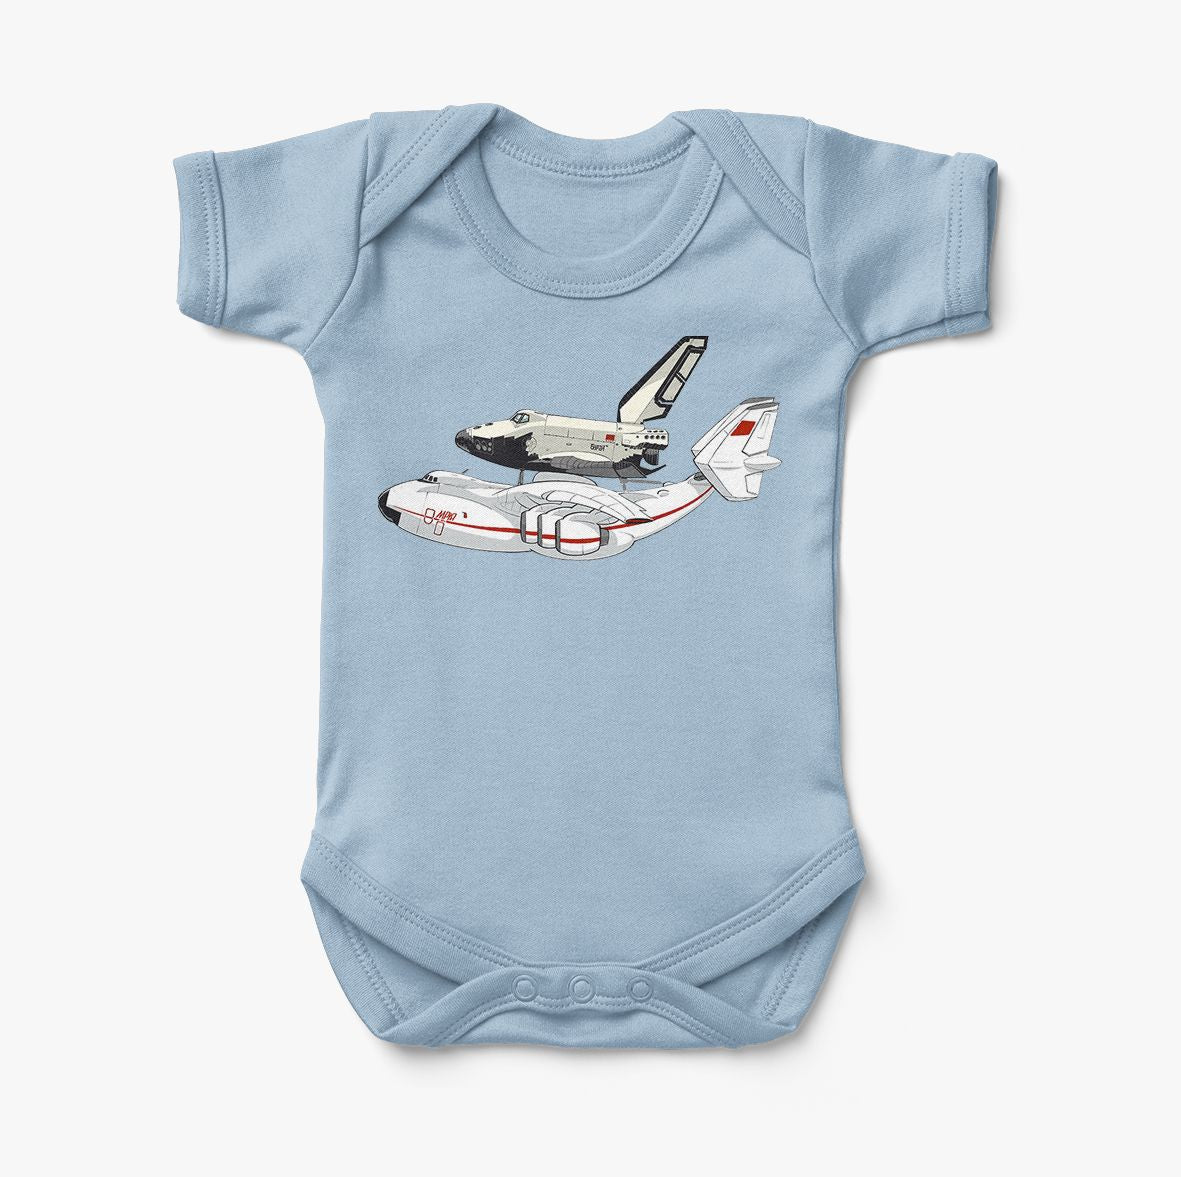 Buran & An-225 Designed Baby Bodysuits